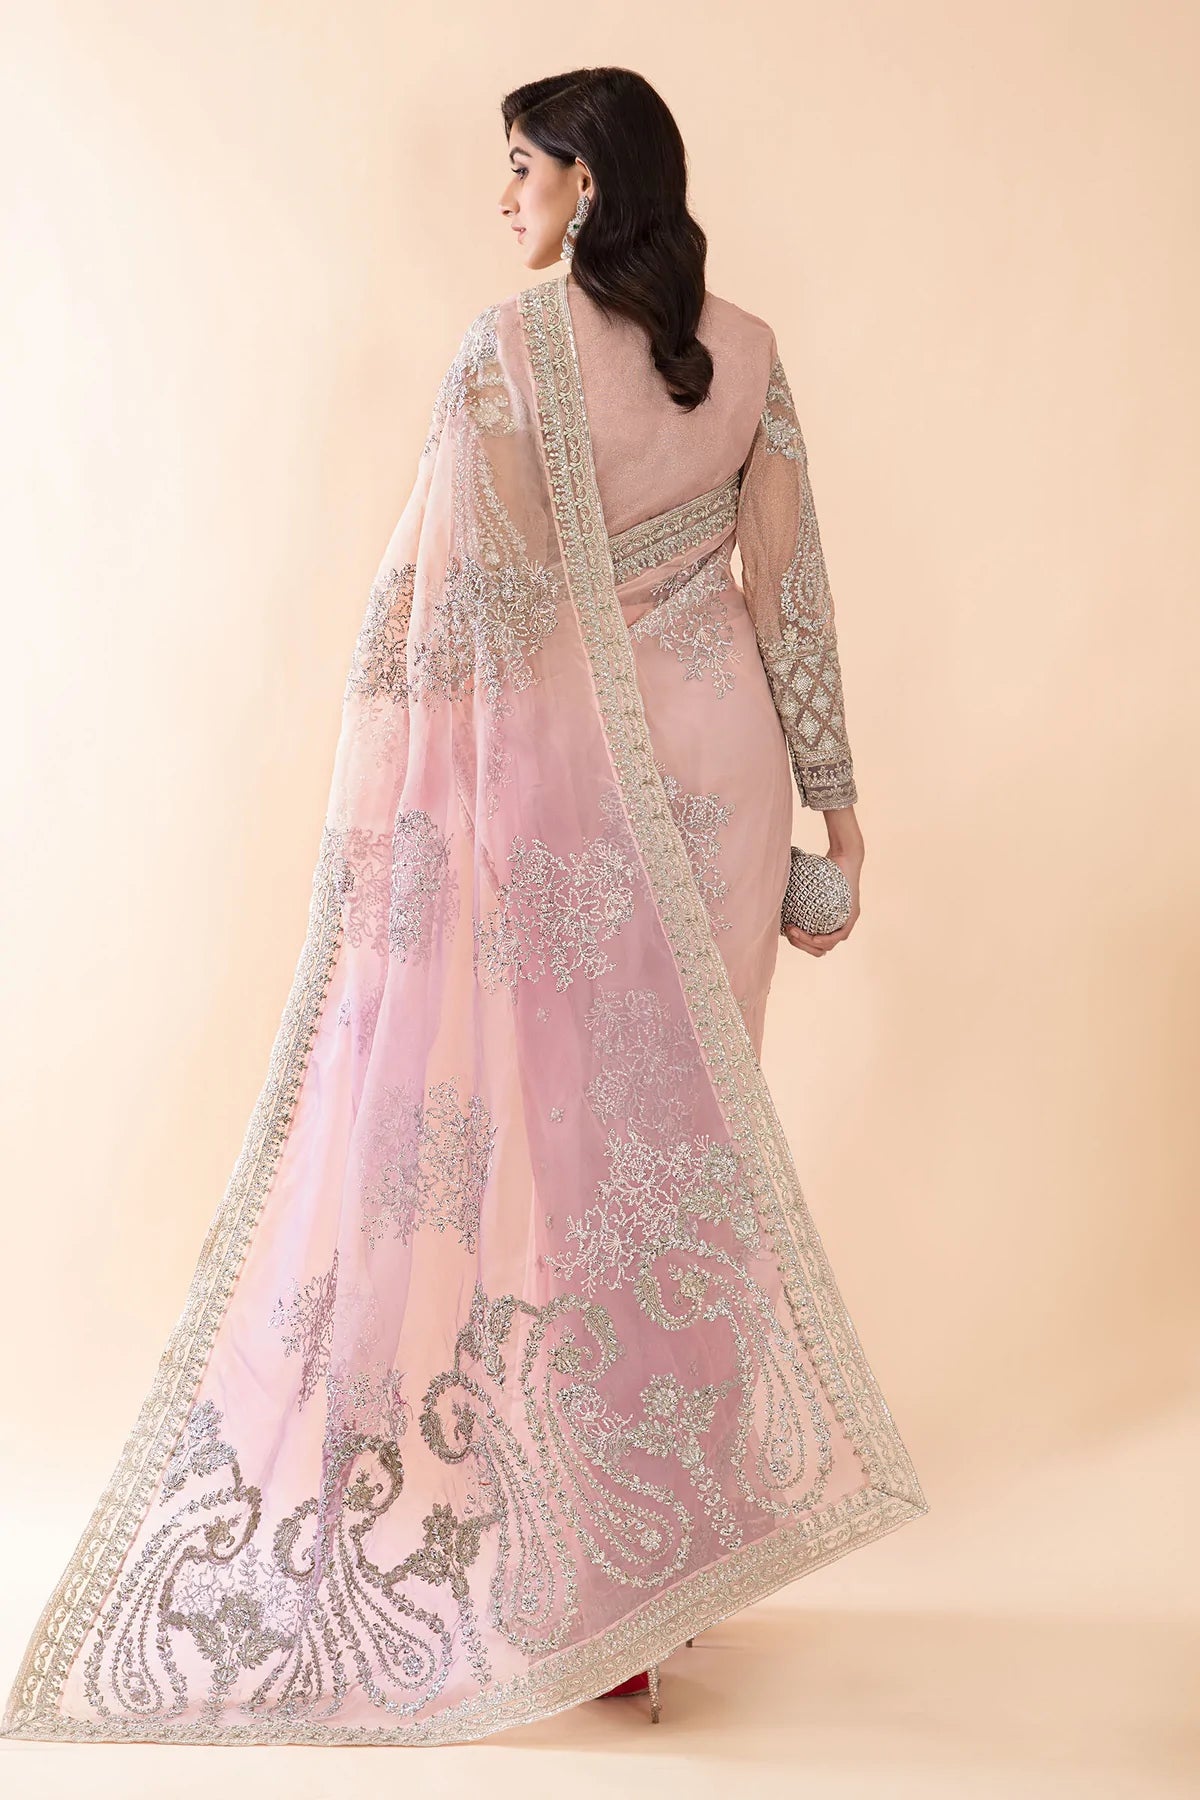 wedding and bridal saree online in dubai